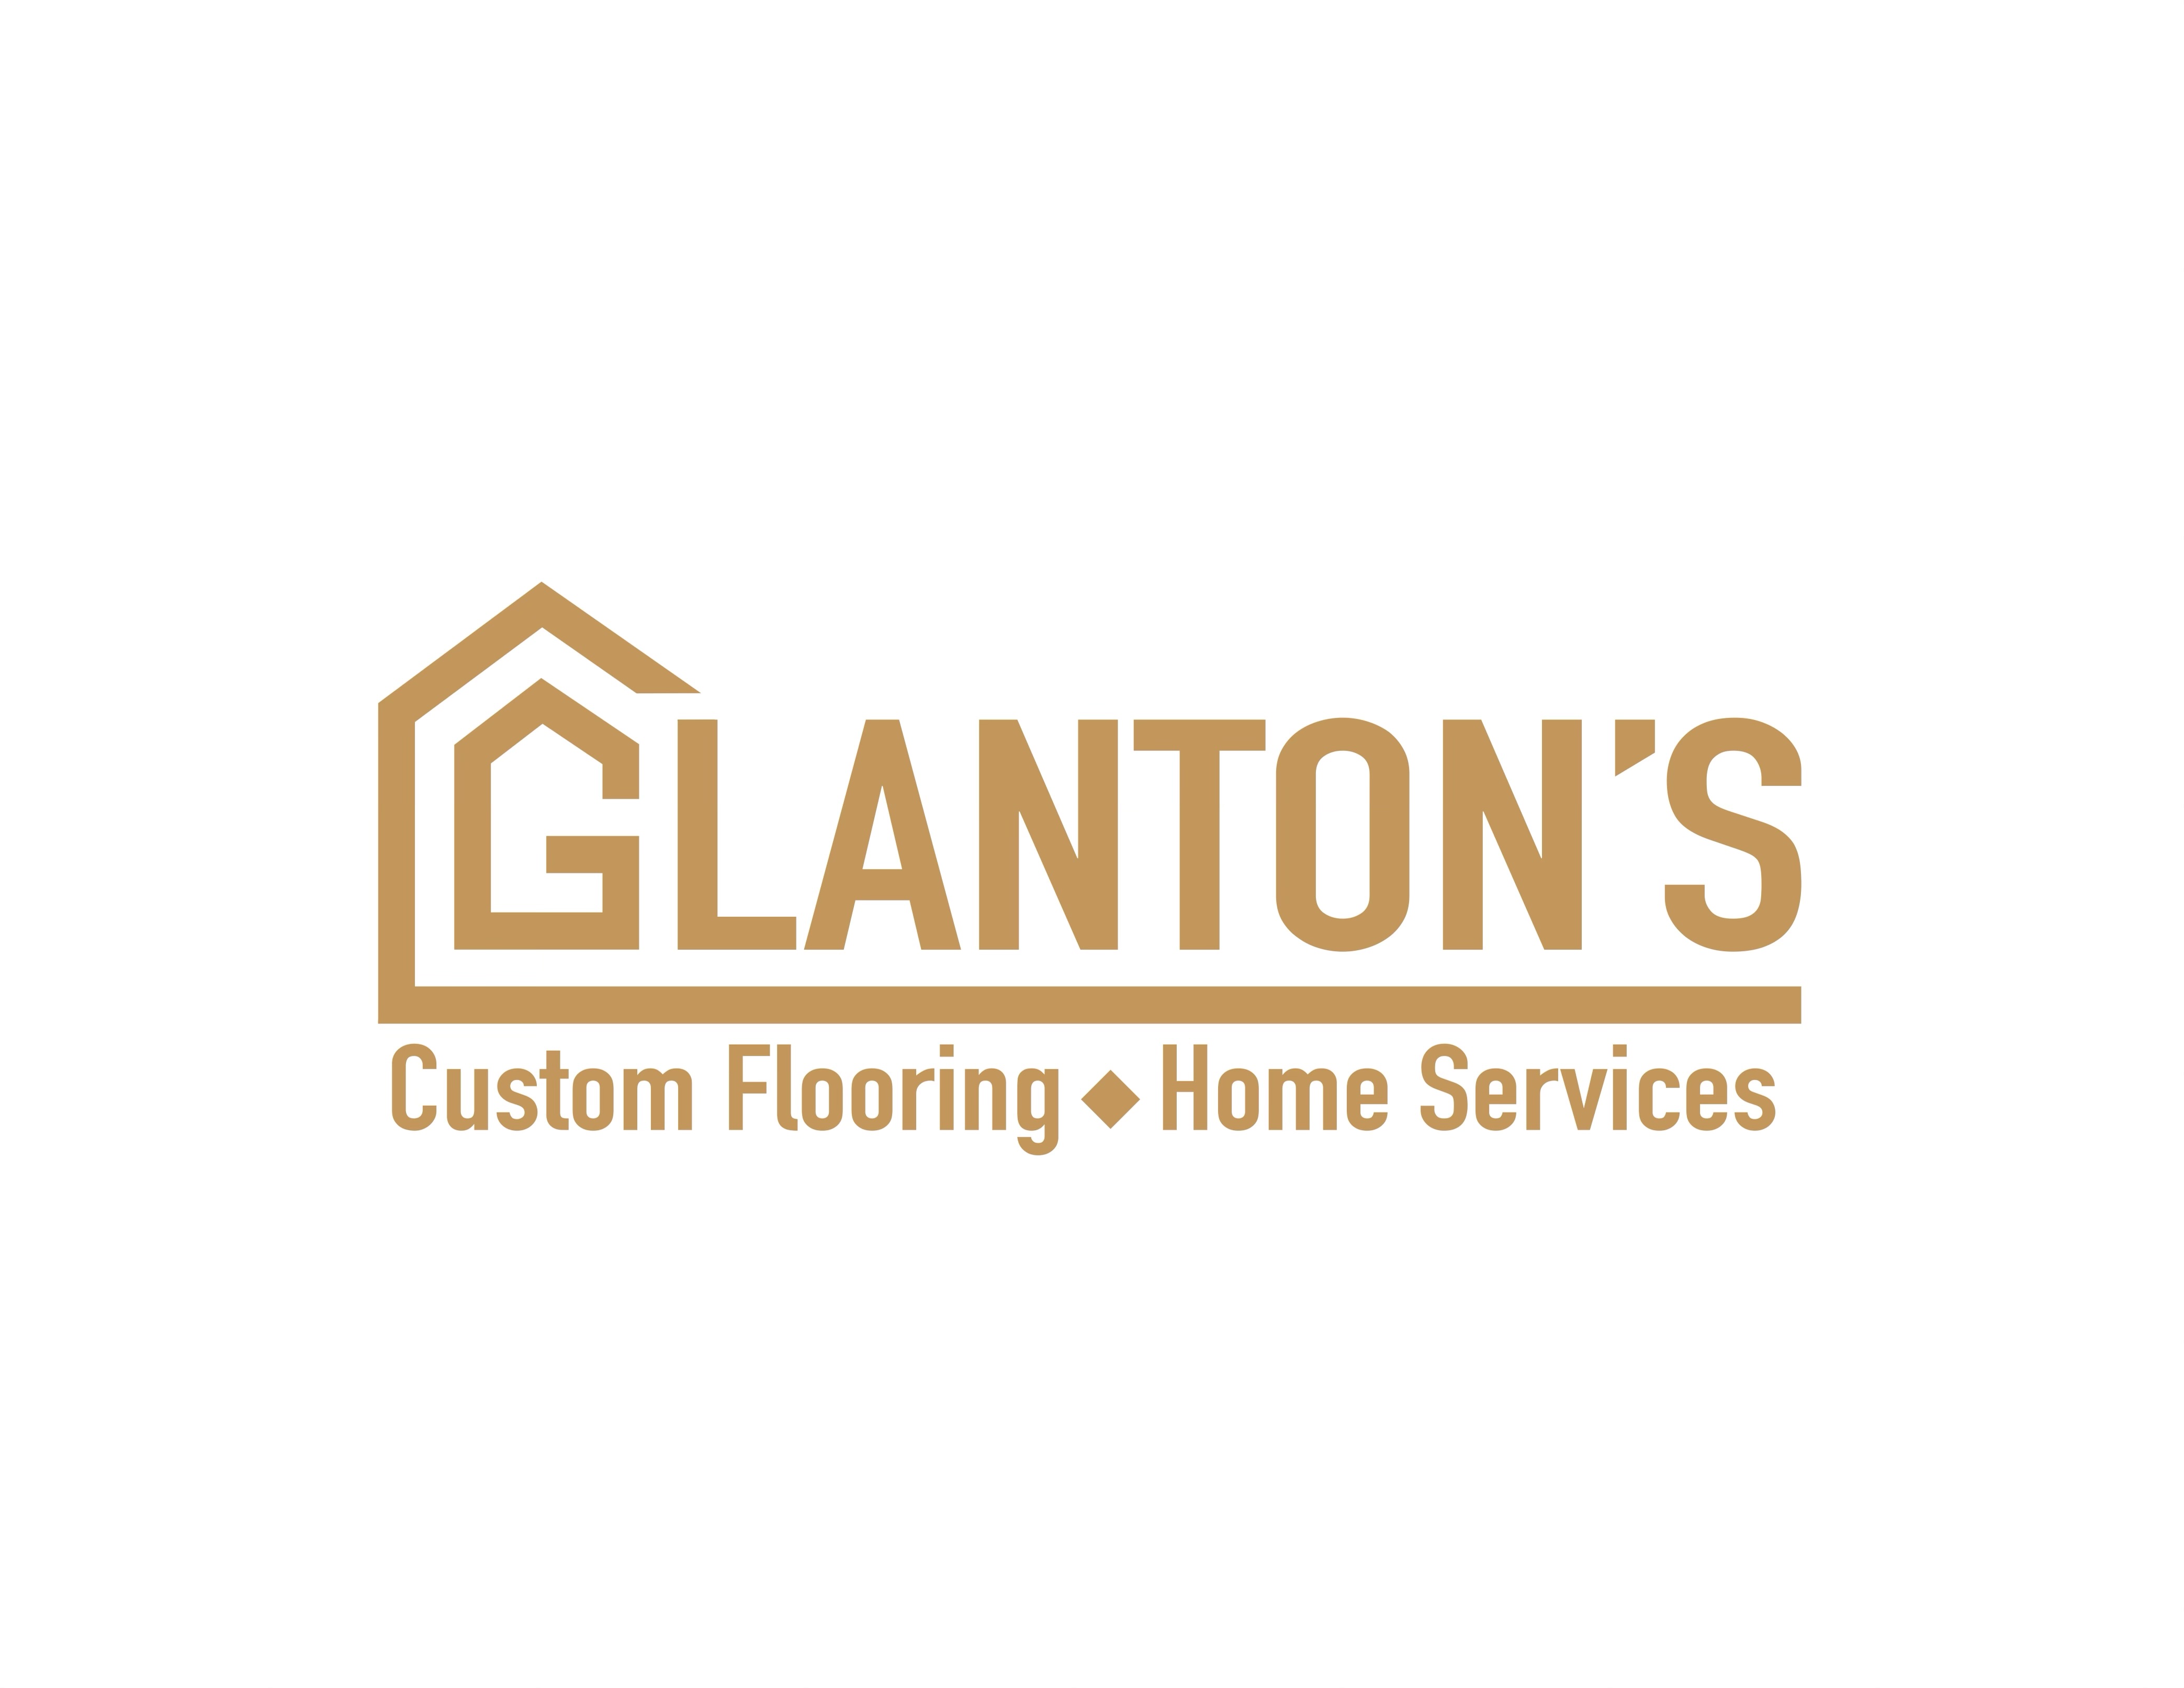 Glantons Custom Flooring & Home Services Logo